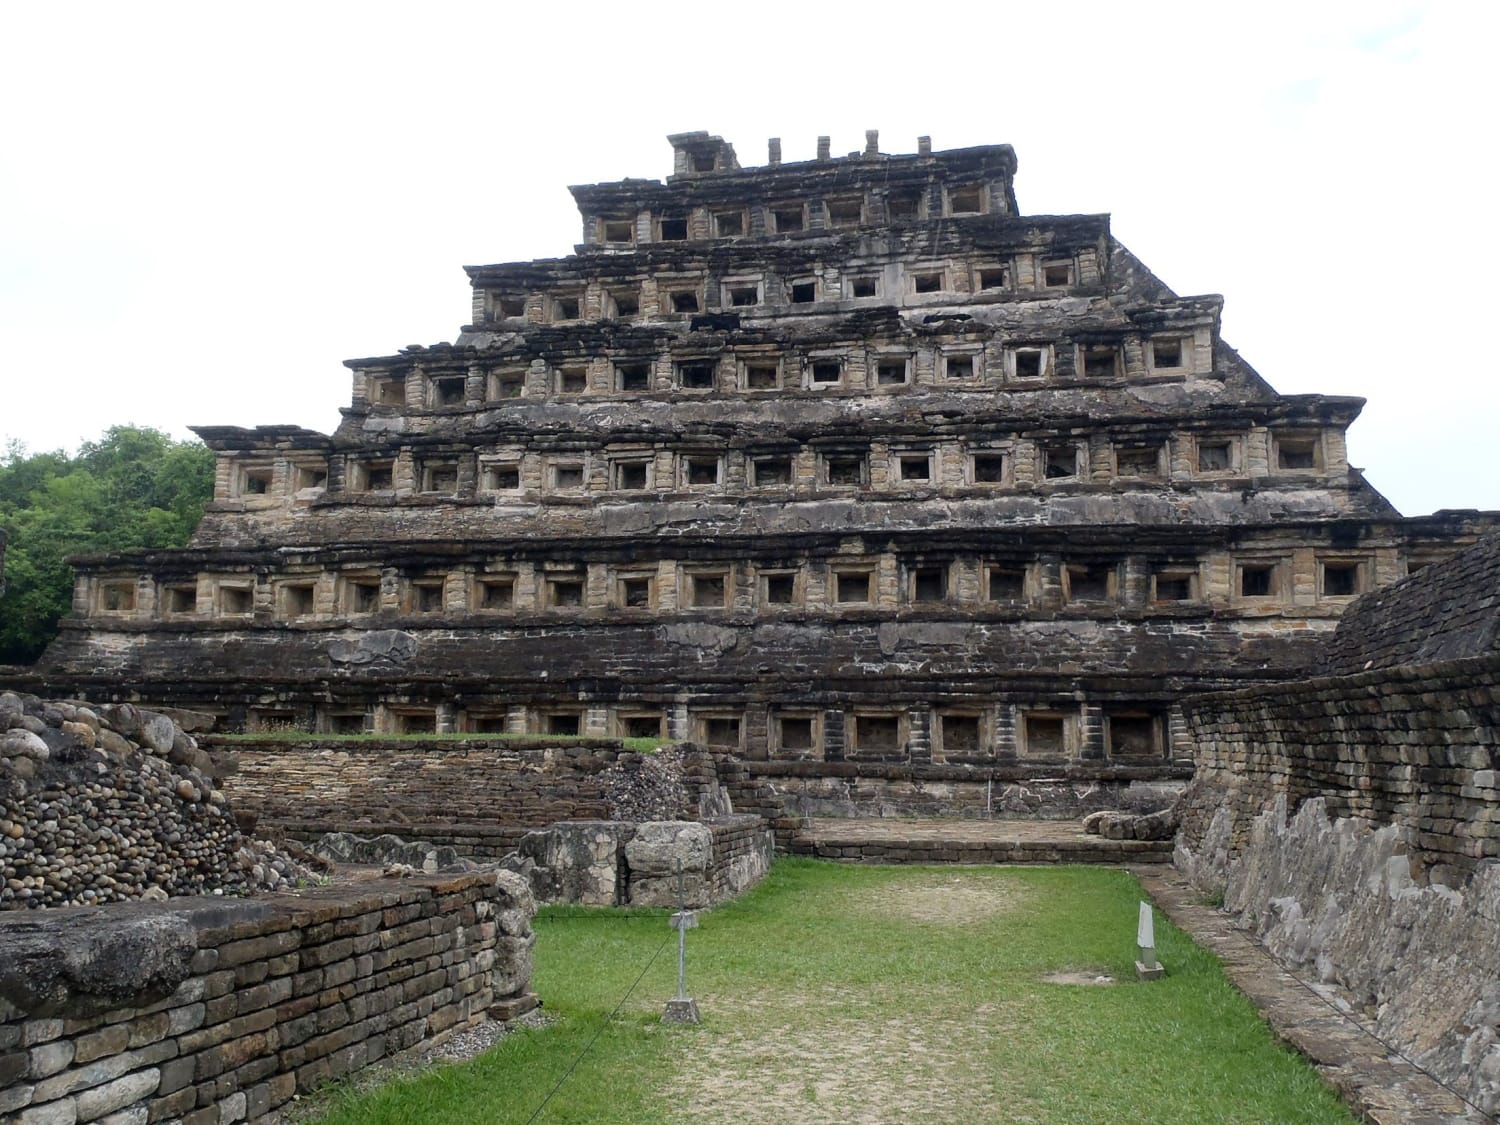 The Pyramid of the Niches, at El Tajín in Mexico. Classic Veracruz culture, 600-1200 AD